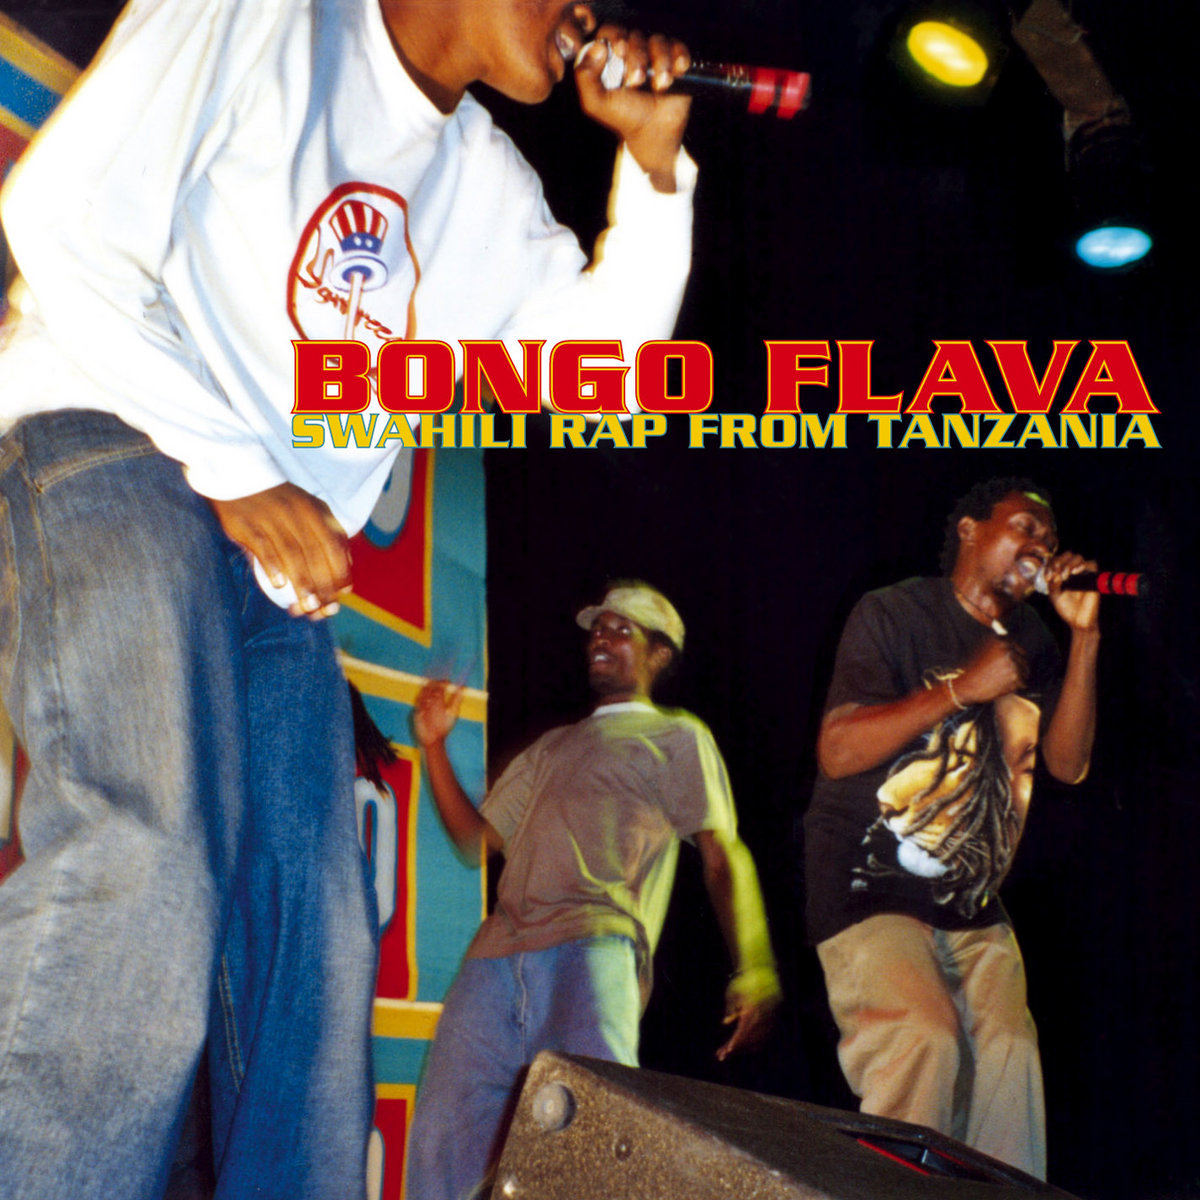 tanzania music download